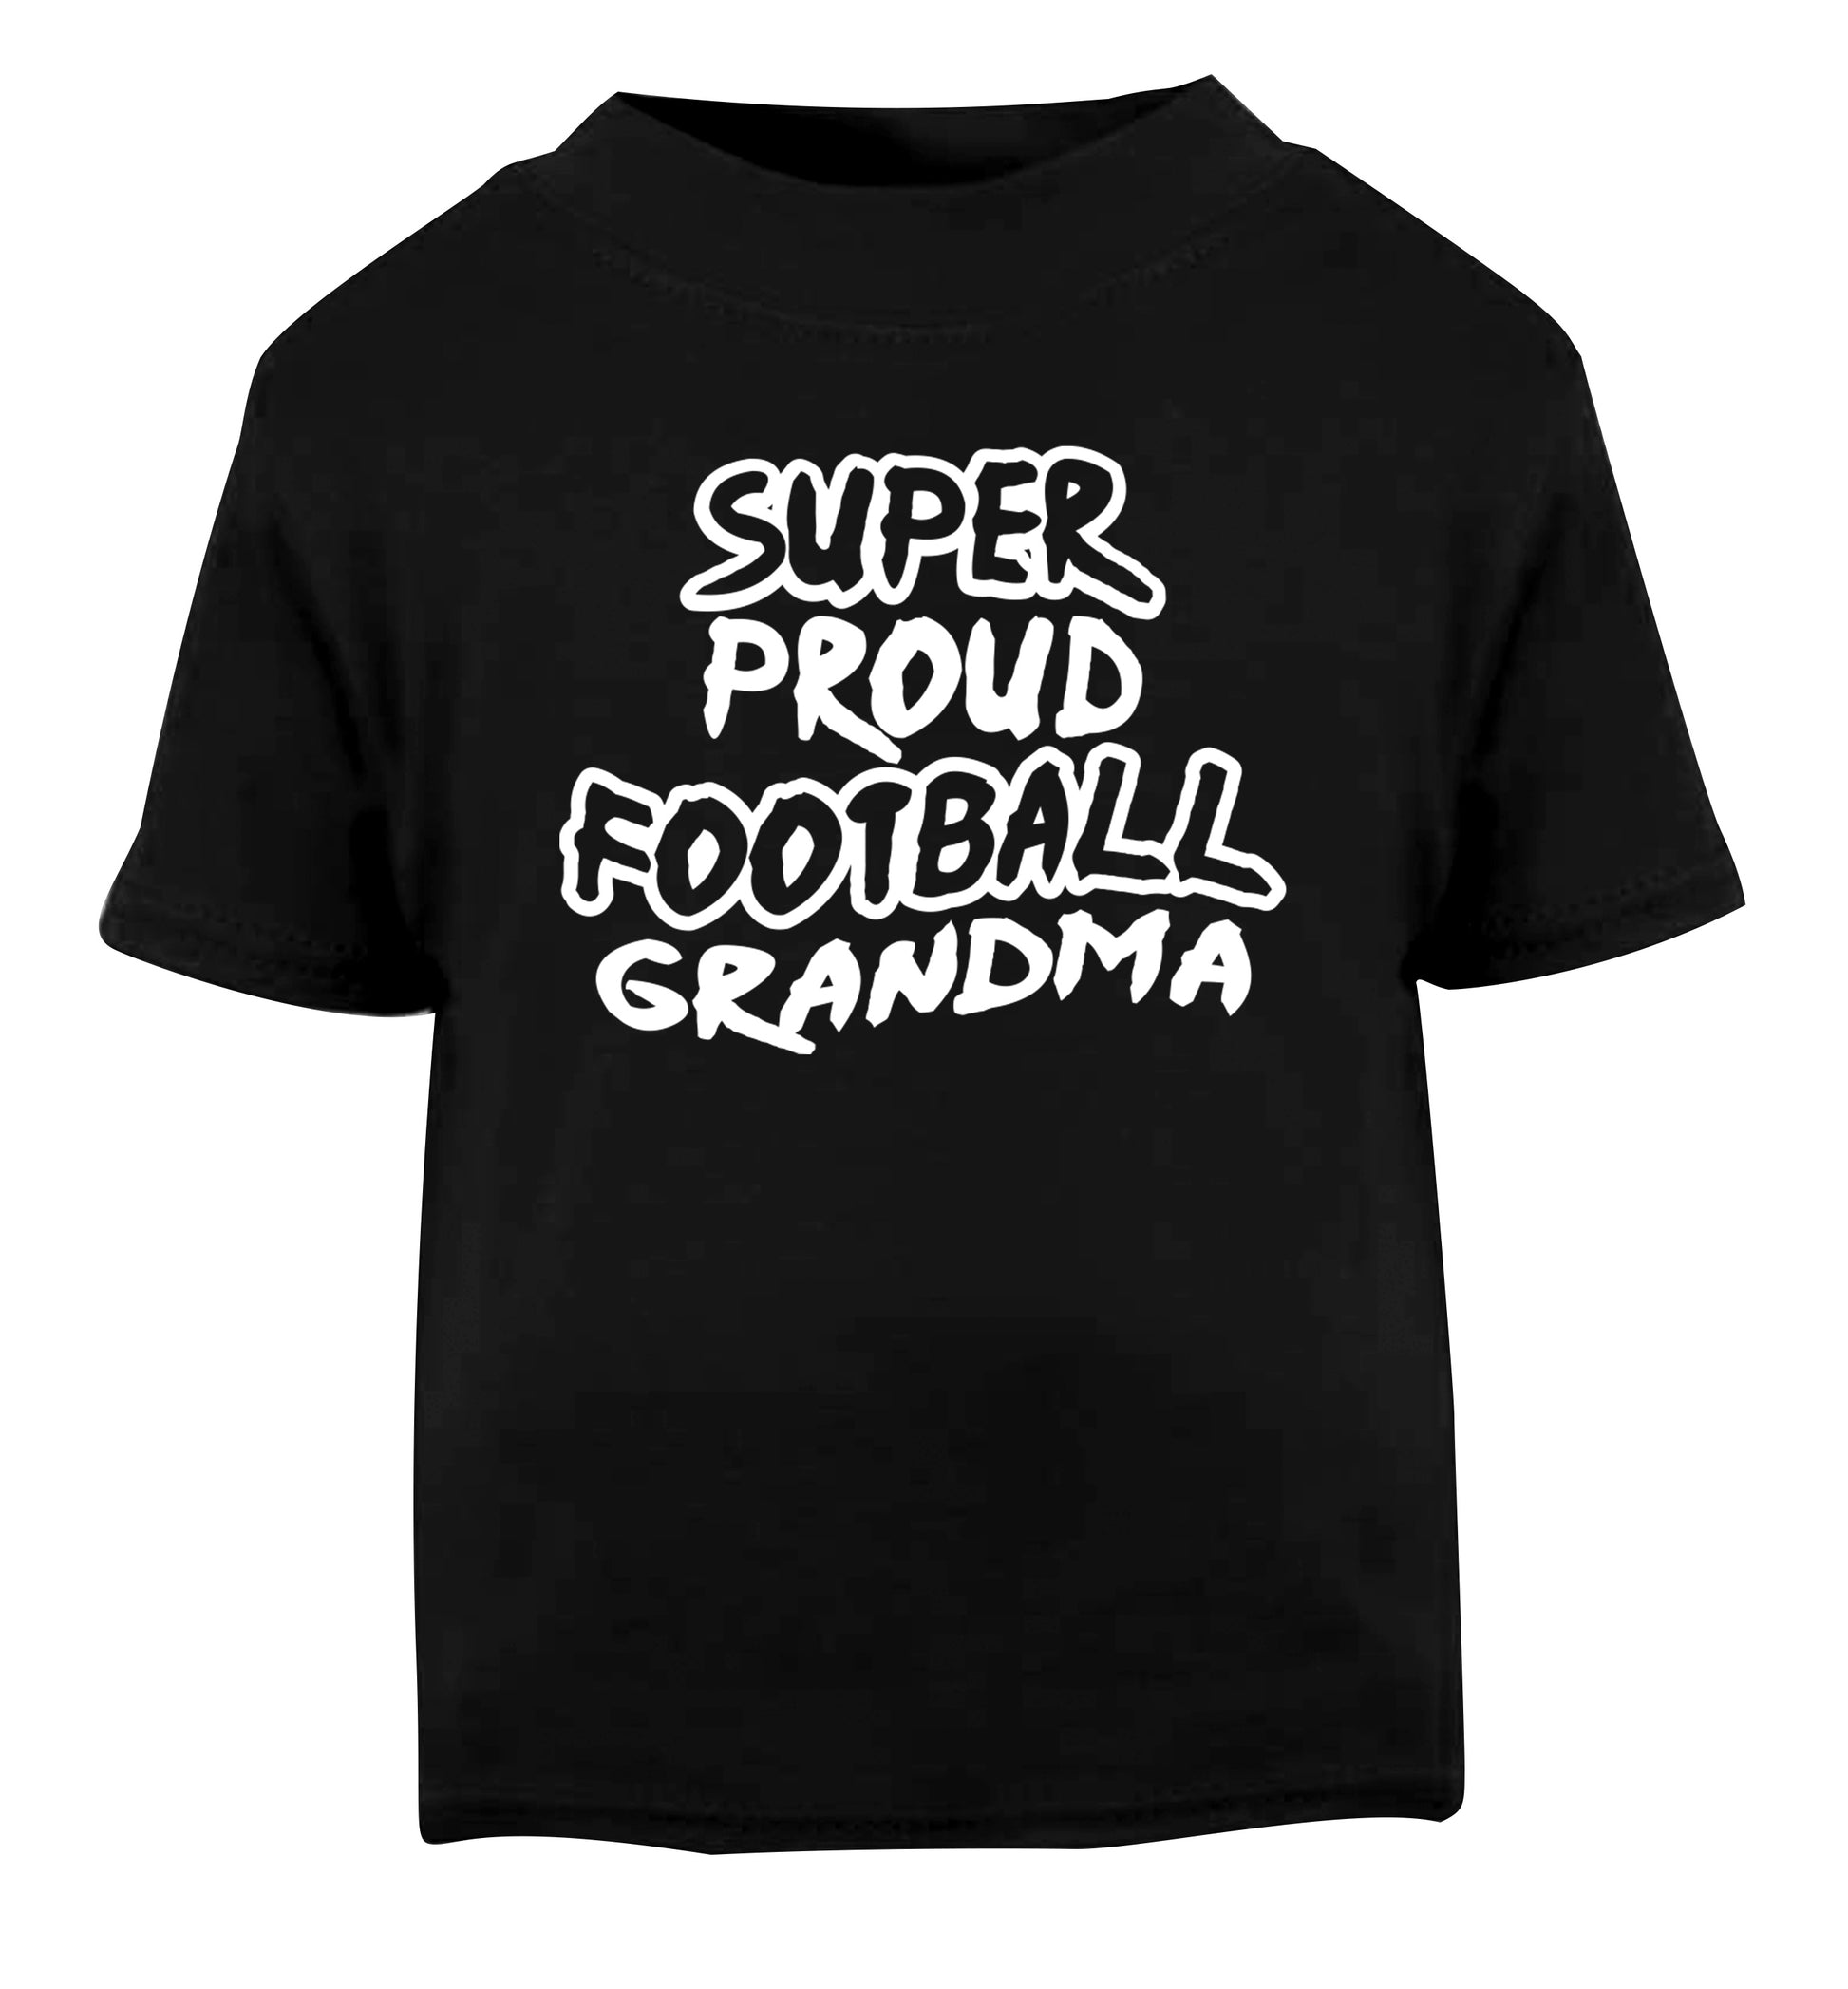 Super proud football grandma Black Baby Toddler Tshirt 2 years